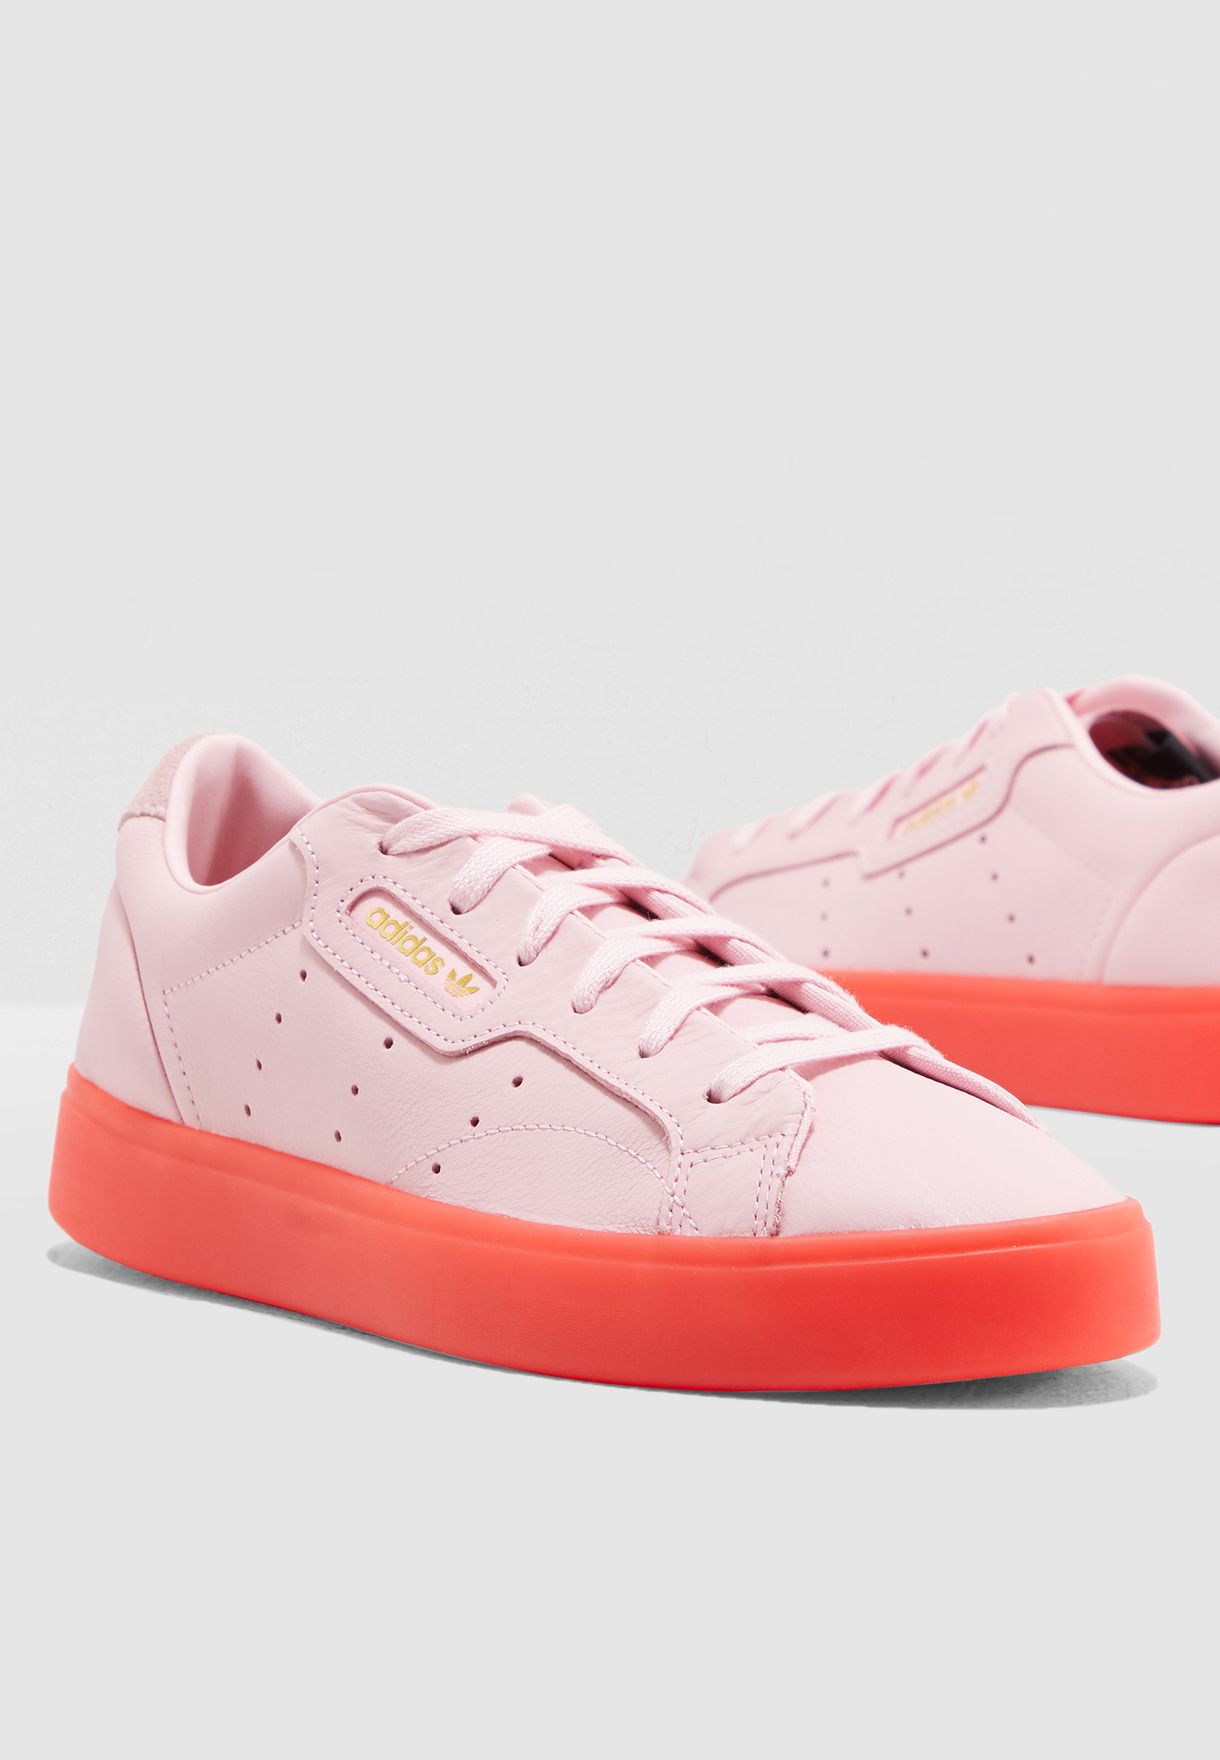 adidas originals sleek pink